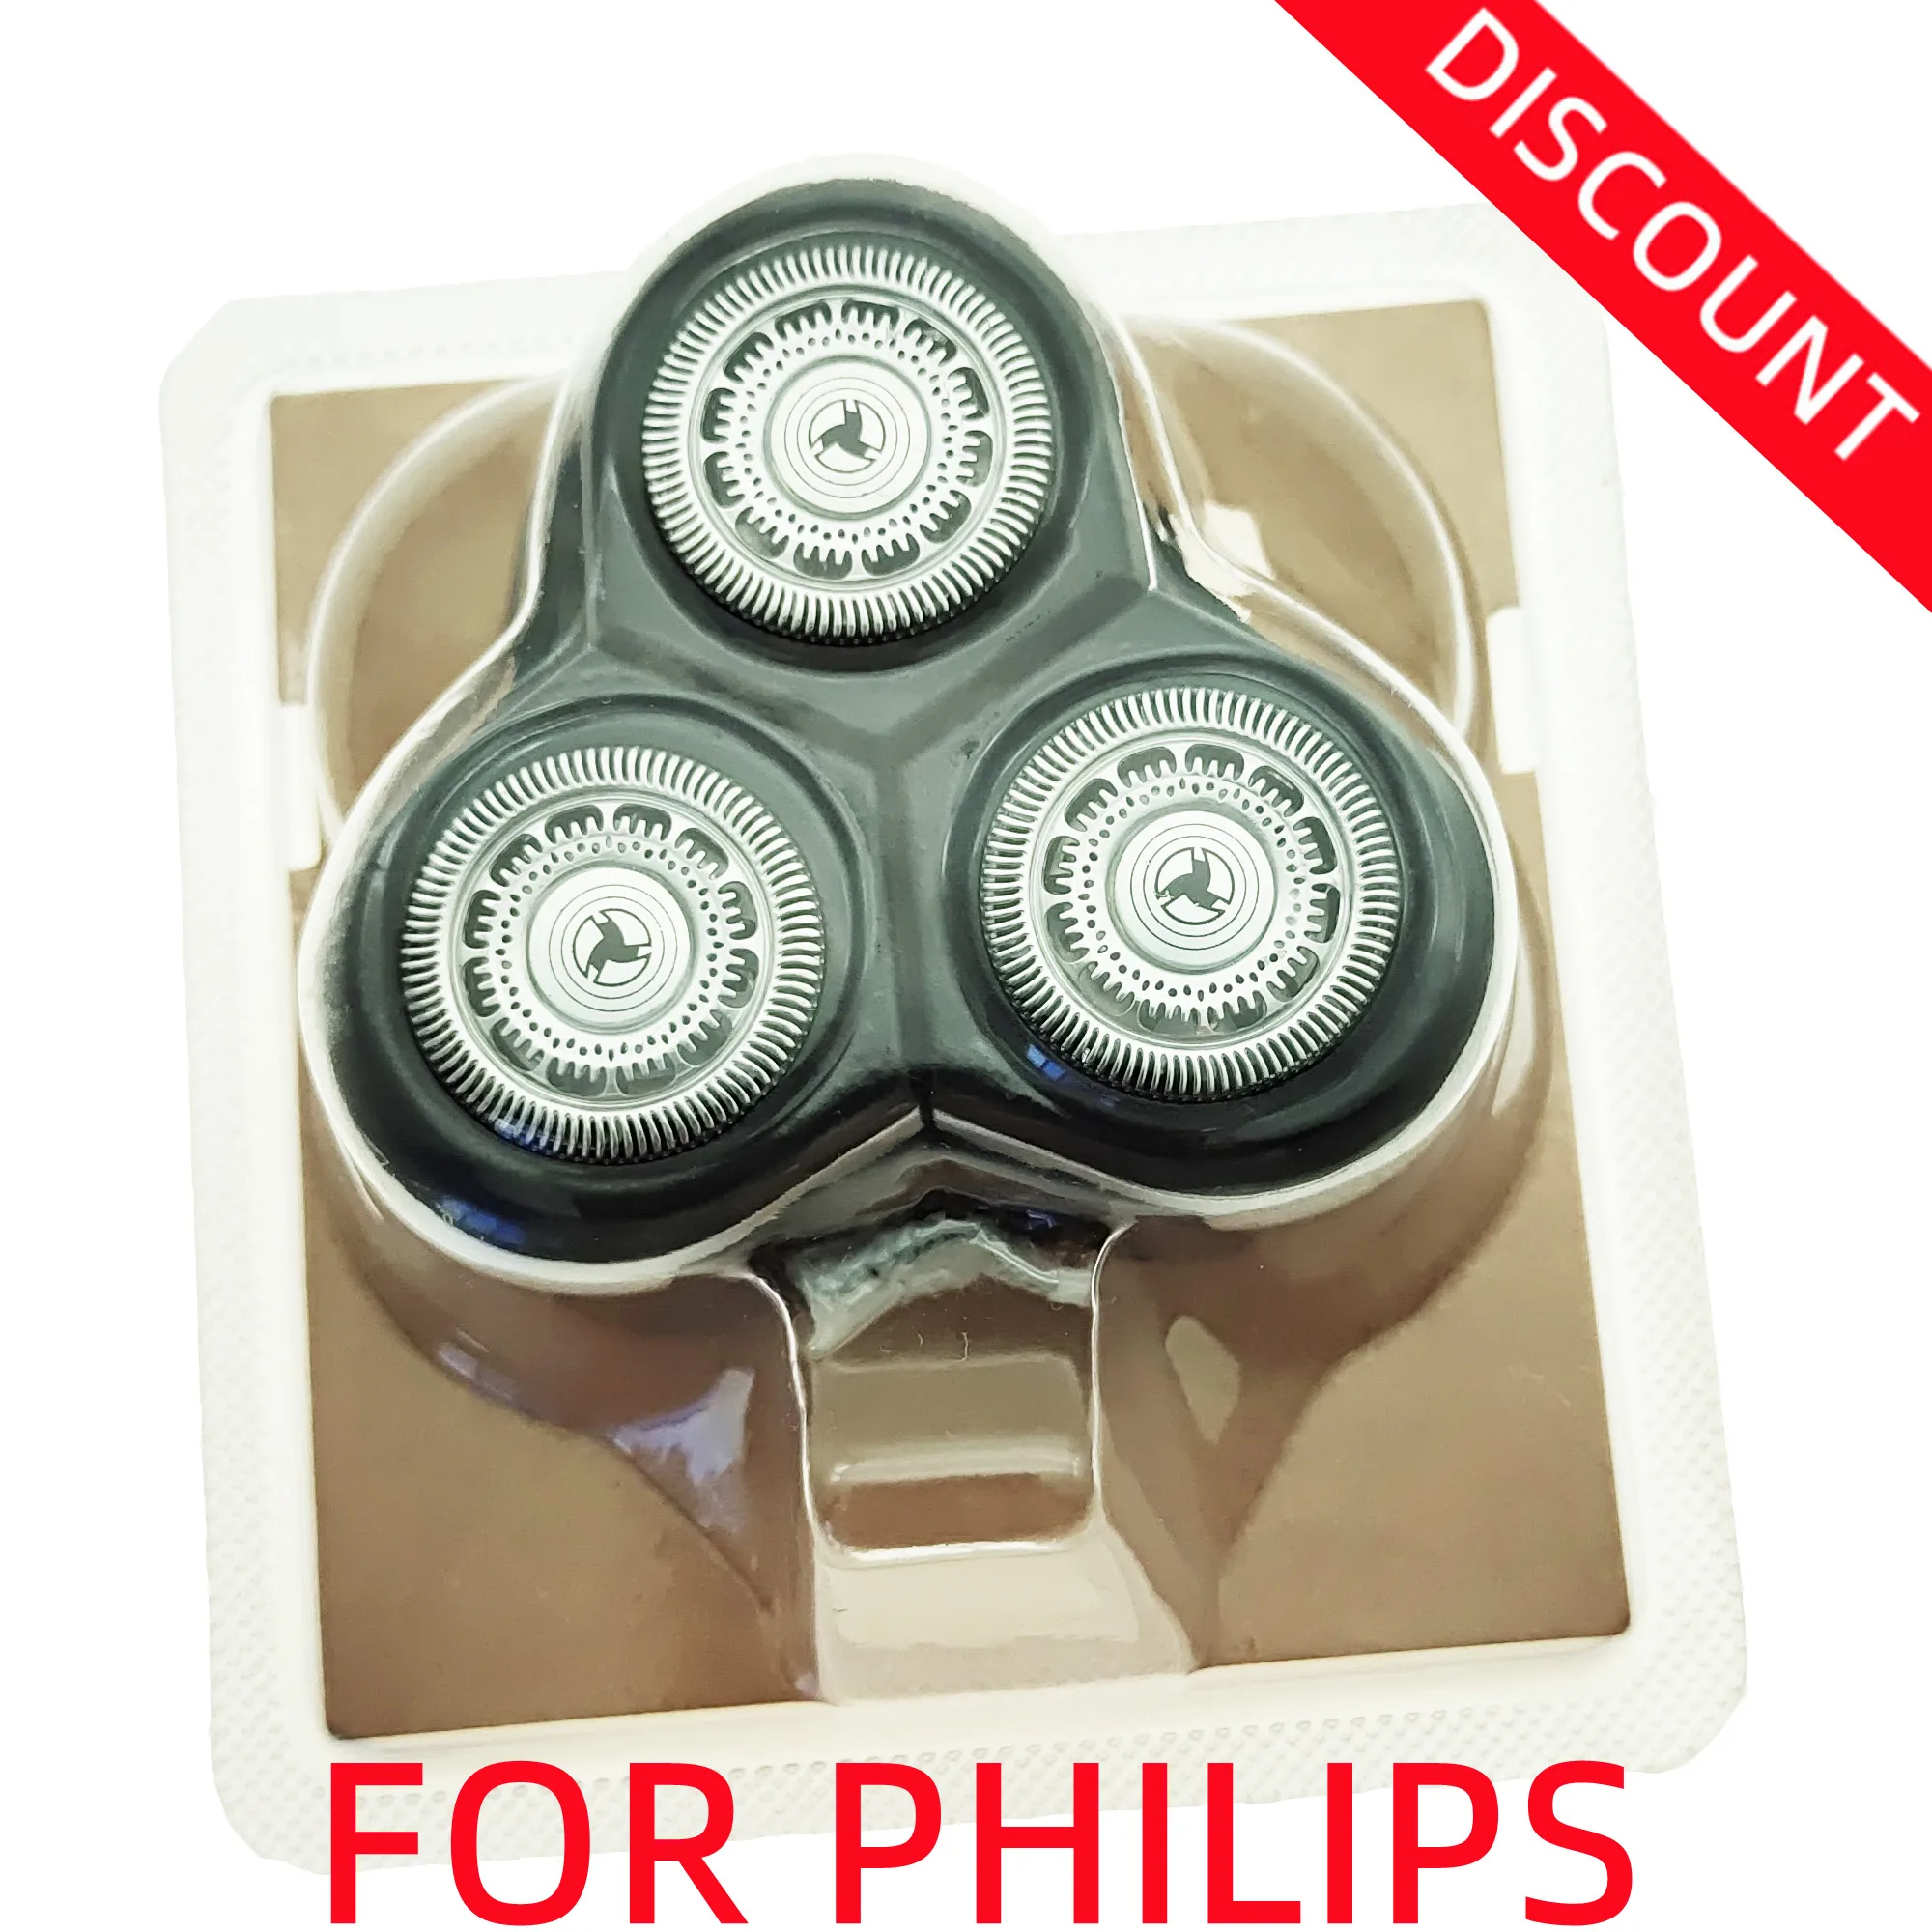 RQ12 replacement shaver heads for Philips RQ1250 RQ1250CC RQ1260 RQ1150 RQ1151 RQ1155 RQ1160 RQ1180 RQ1050 S9911 S9731 S9711 shaver heads hair clipper comb for philips rq111 rq12 rq11 rq10 rq32 rq1185 rq1187 rq1195 rq1250 rq1250 rq1180 rq1050